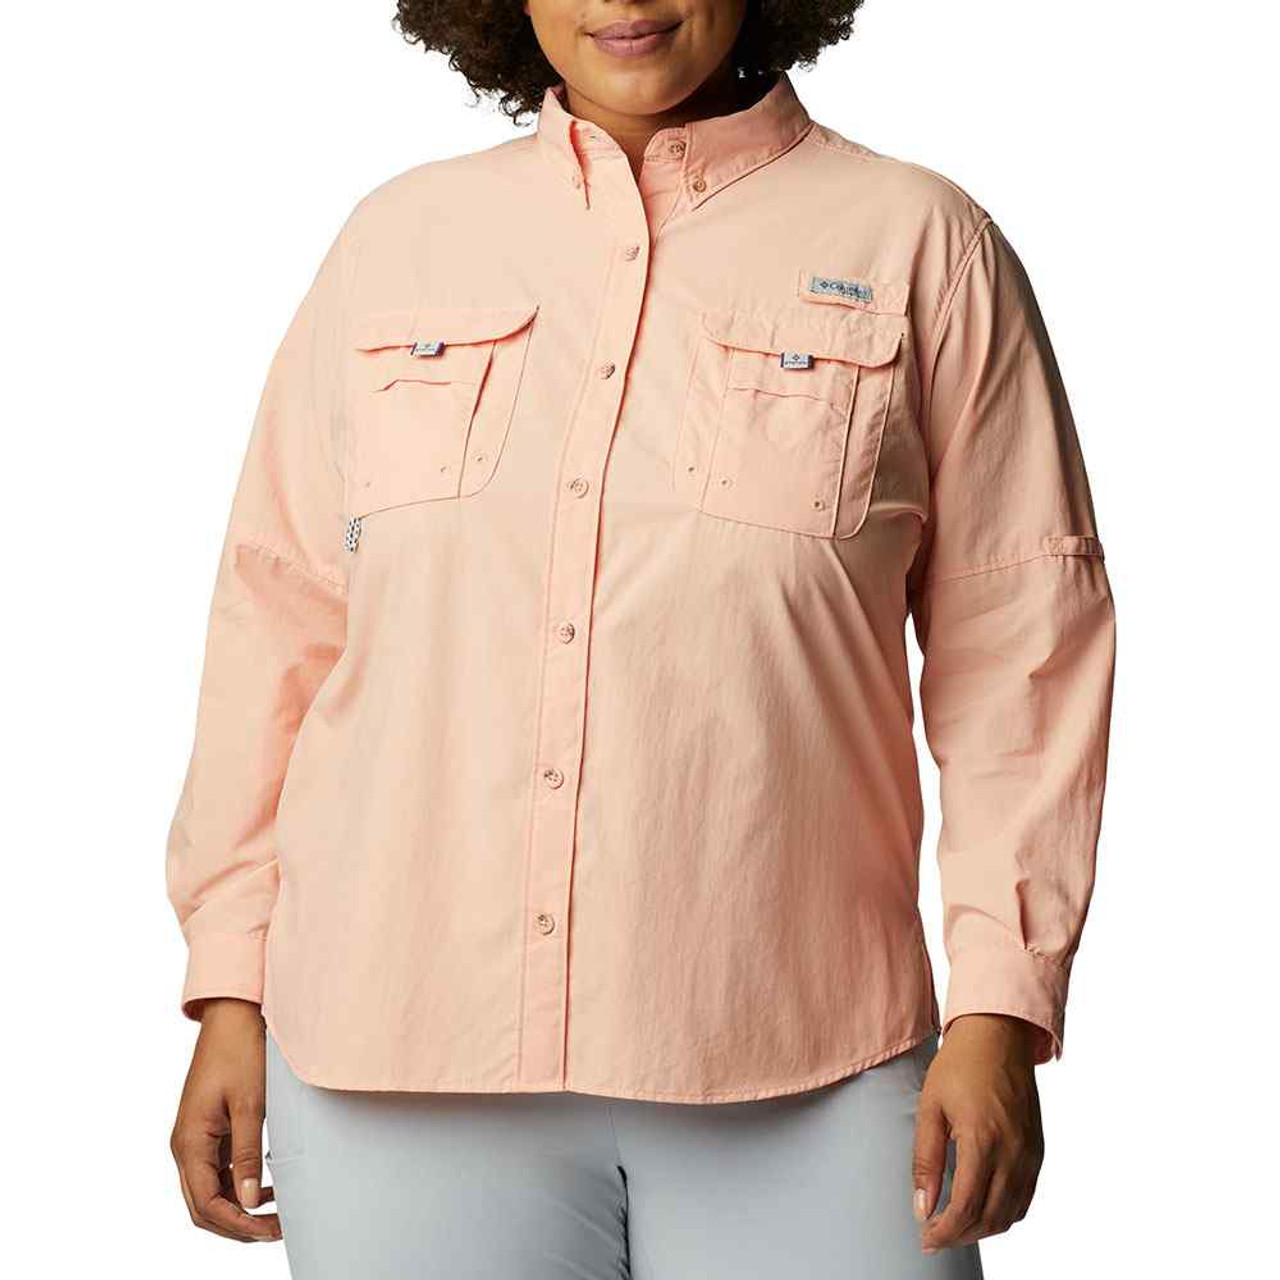 Columbia Women's PFG Bahama Short Sleeve Shirt, Black, X-Small at